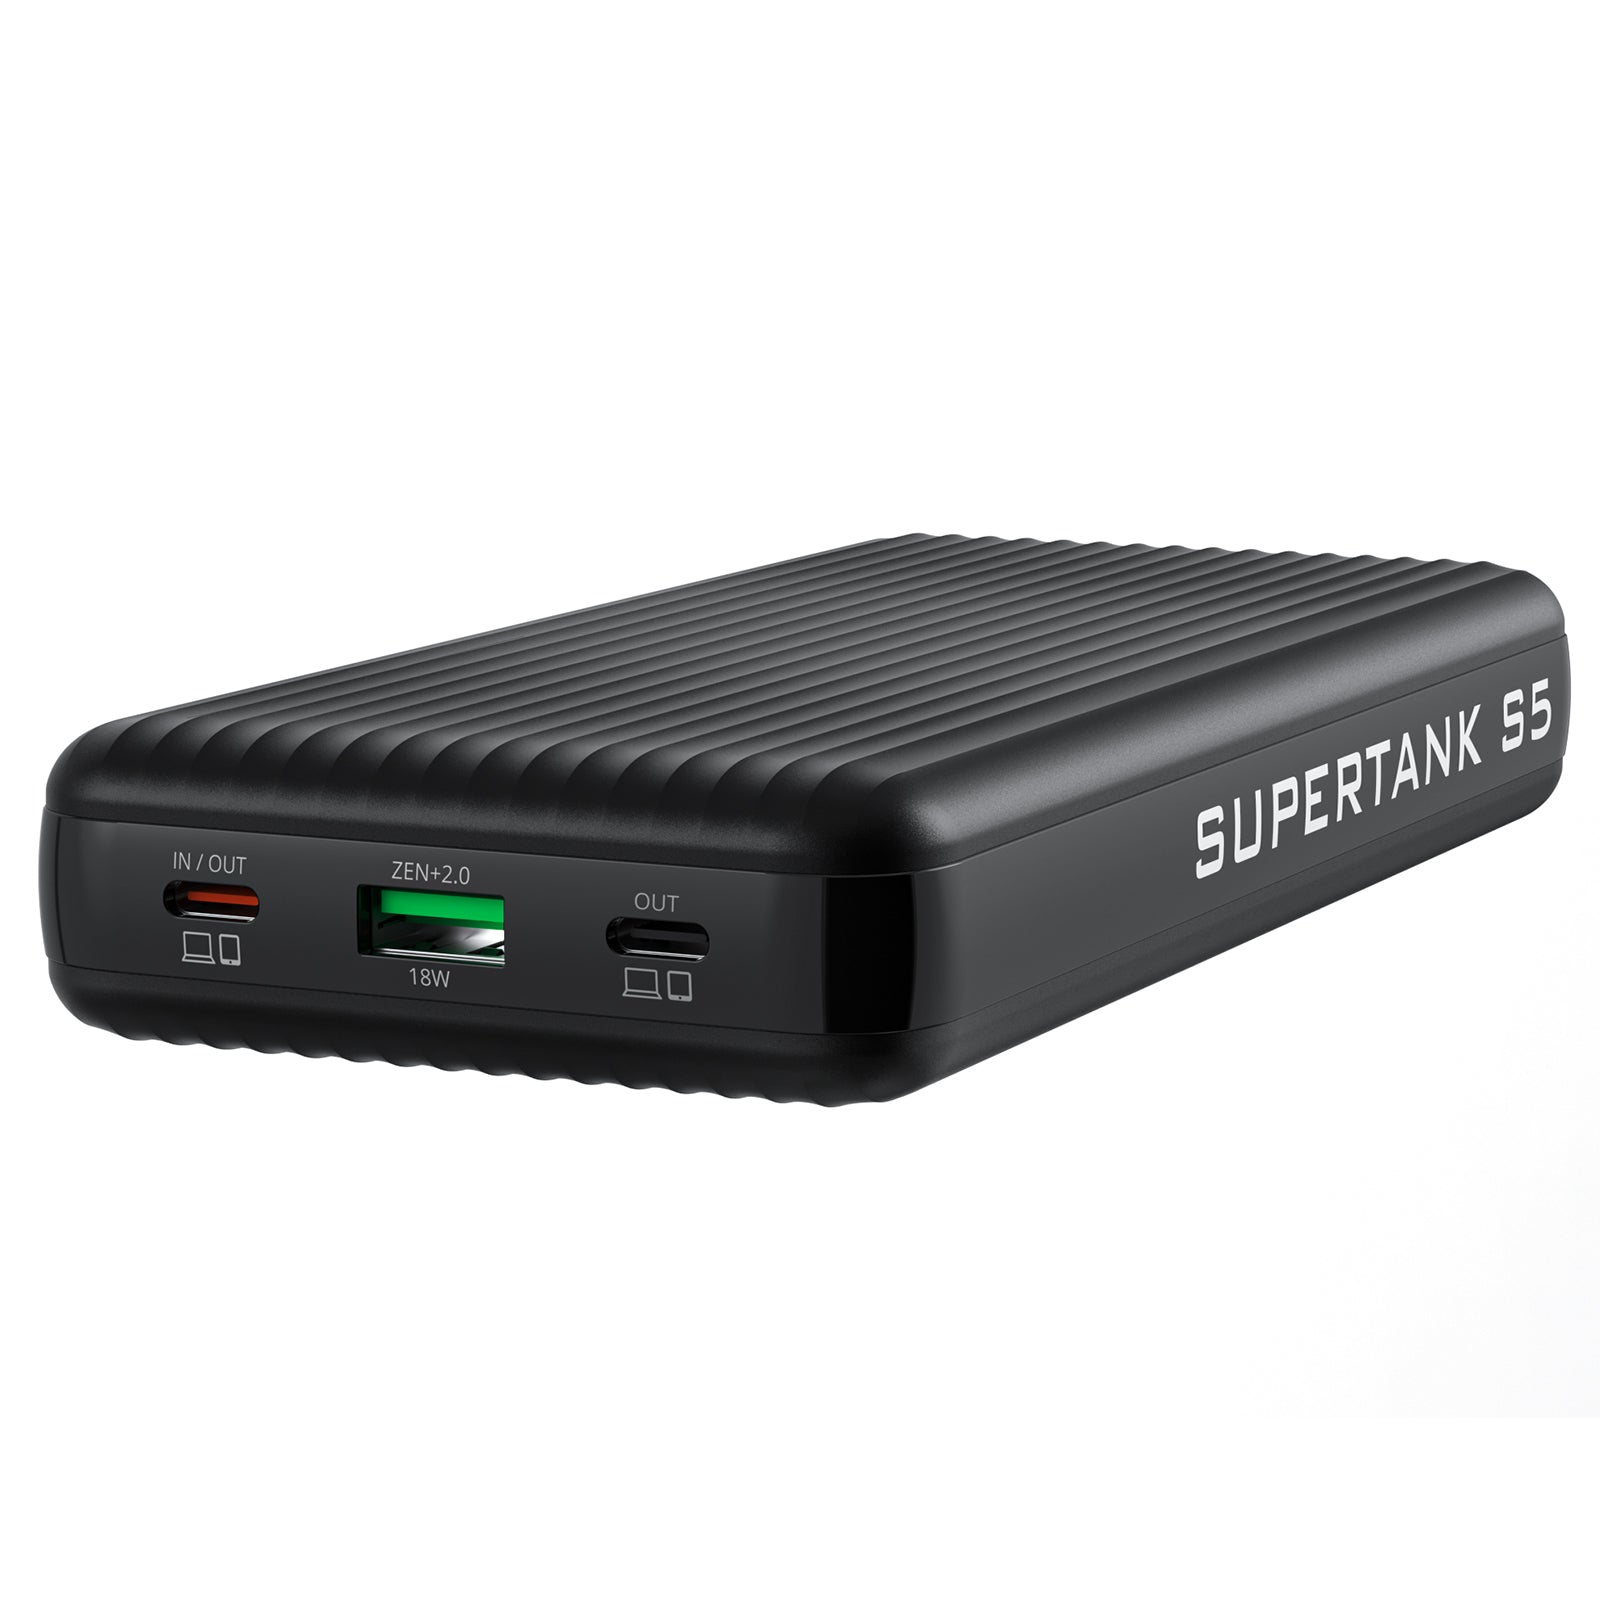 SuperTank S Series 100W PD Power Bank